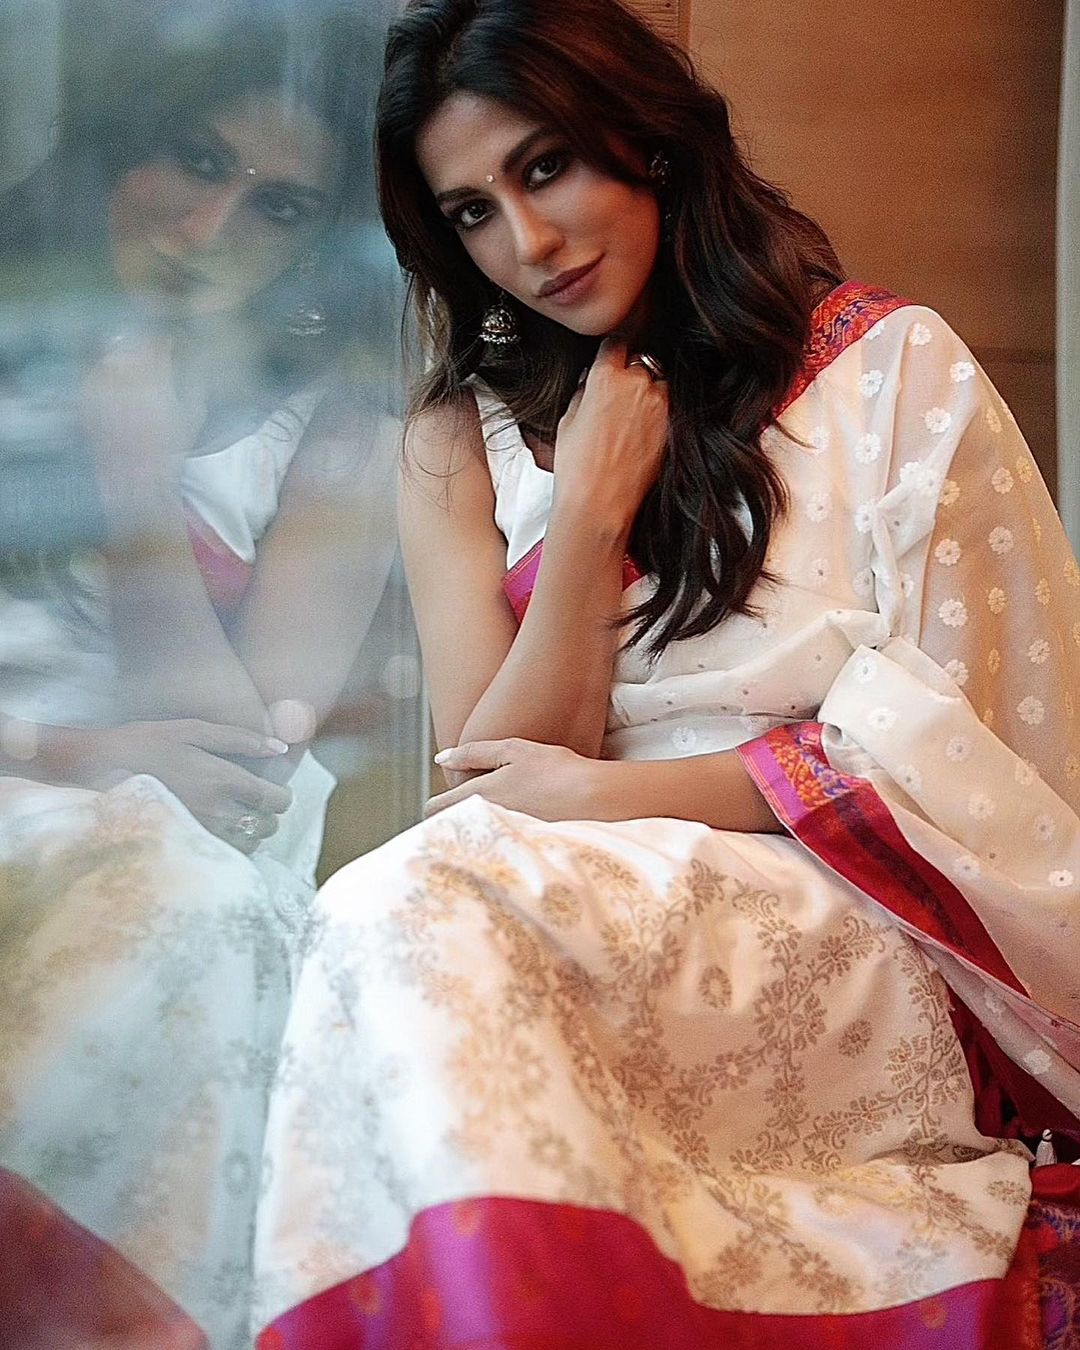 Chitrangda Singh looks elegant in the white saree.